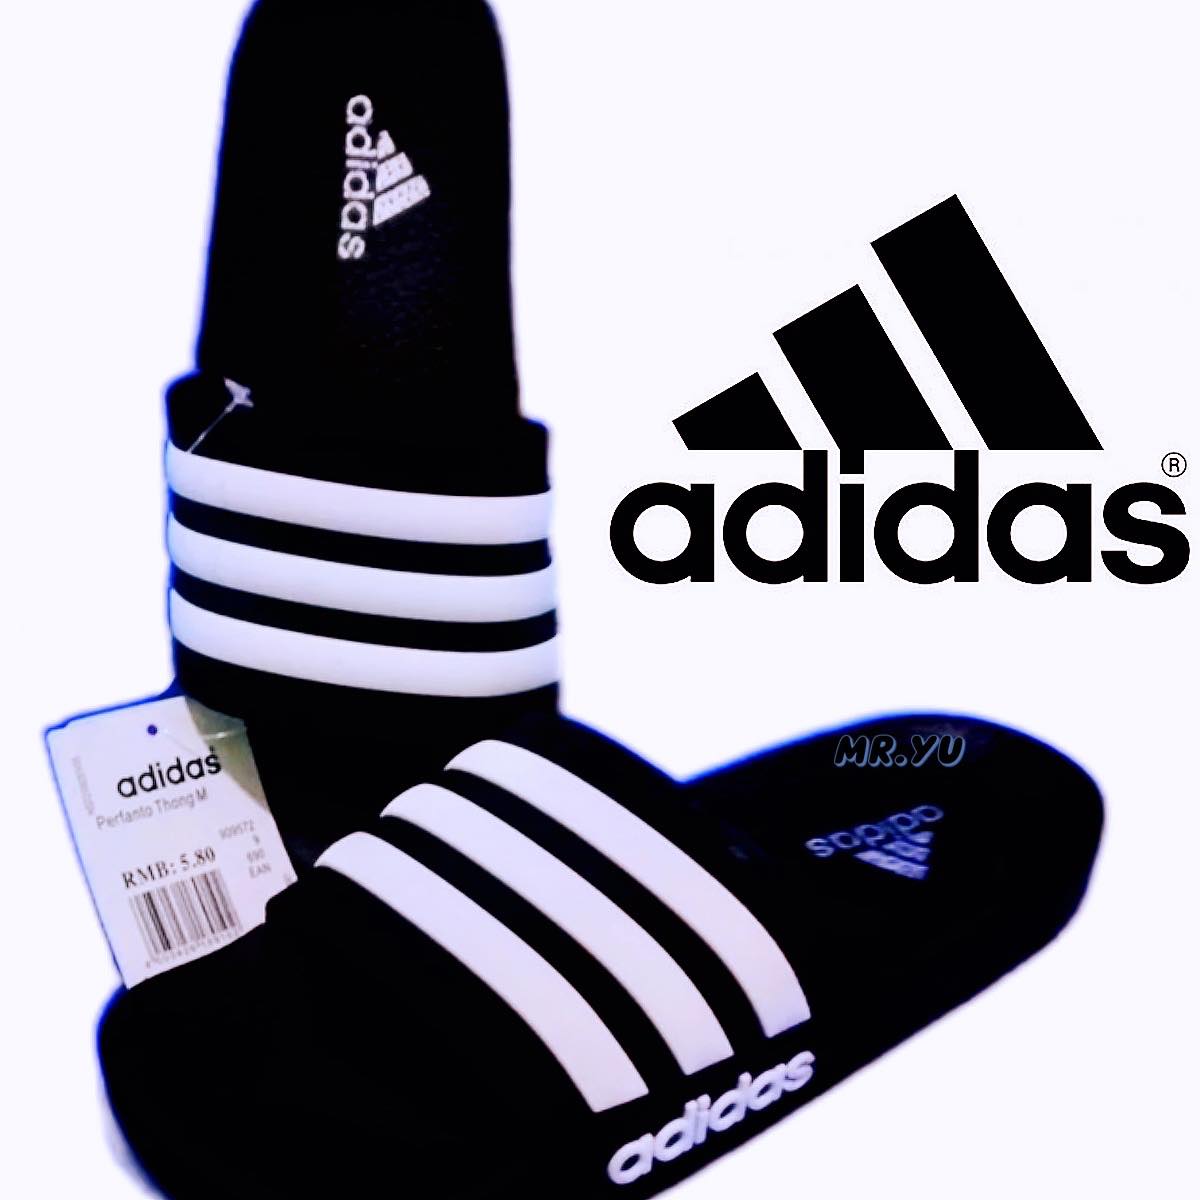 Адидас слайд. Adidas Slippers. Слайдеры адидас. Adidas Slide.